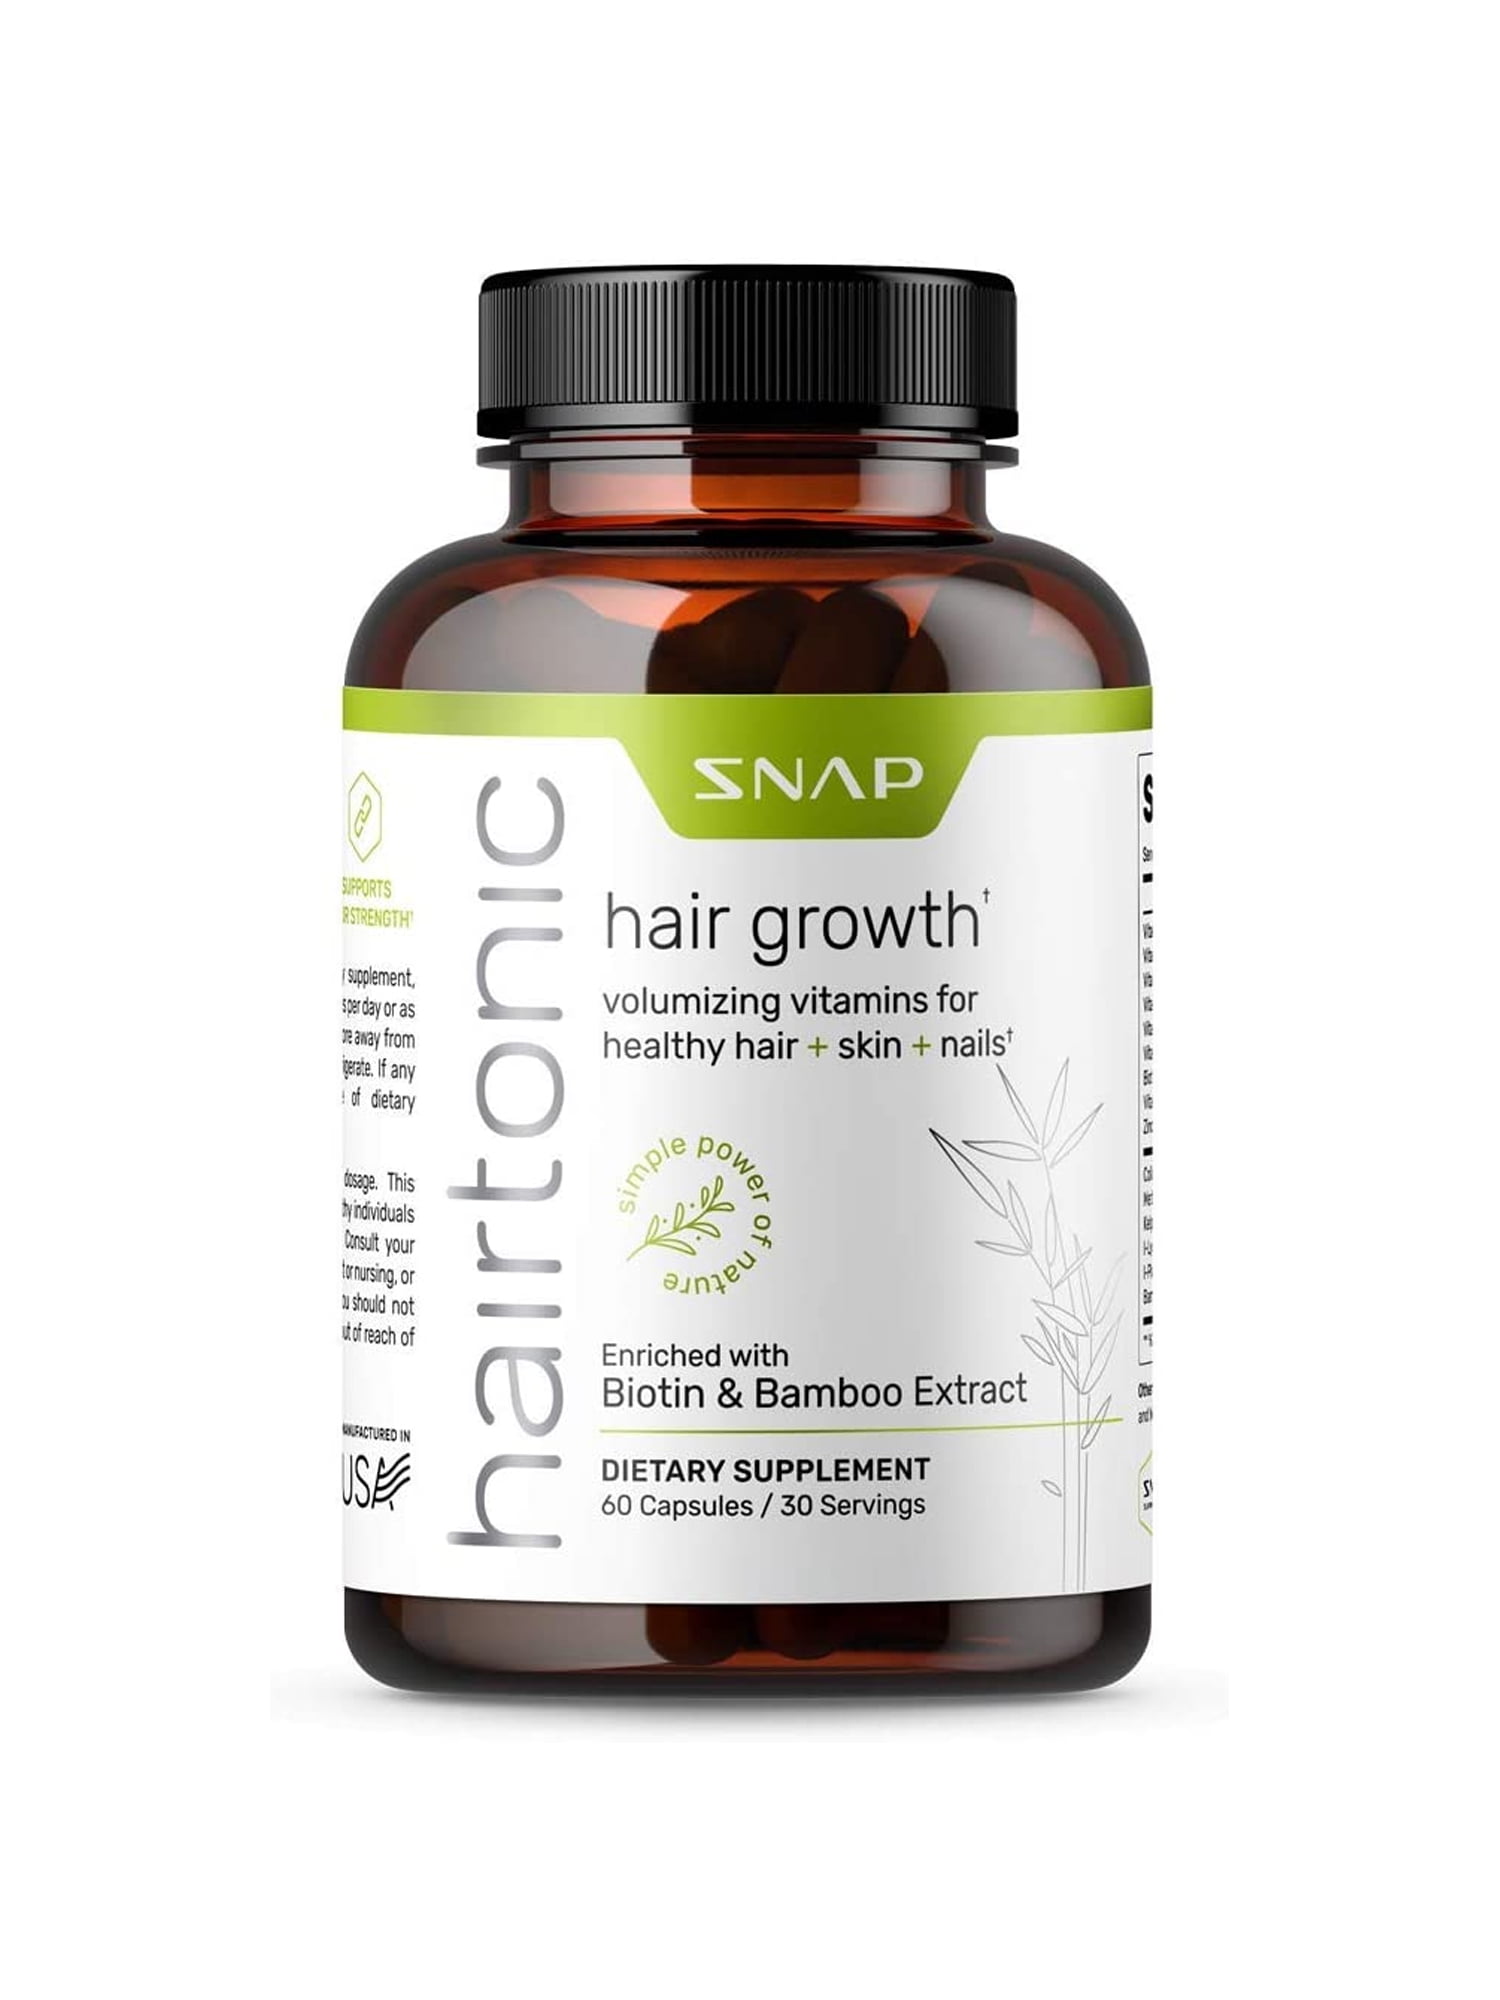 SNAP Supplements Extra Strength Women Hair Growth Pills - Biotin 5000 mcg, Hydrolyzed Healthy Hair, Skin & Nail Vitamins, Faster Growth, Prevent Hair Loss - 60 Capsules